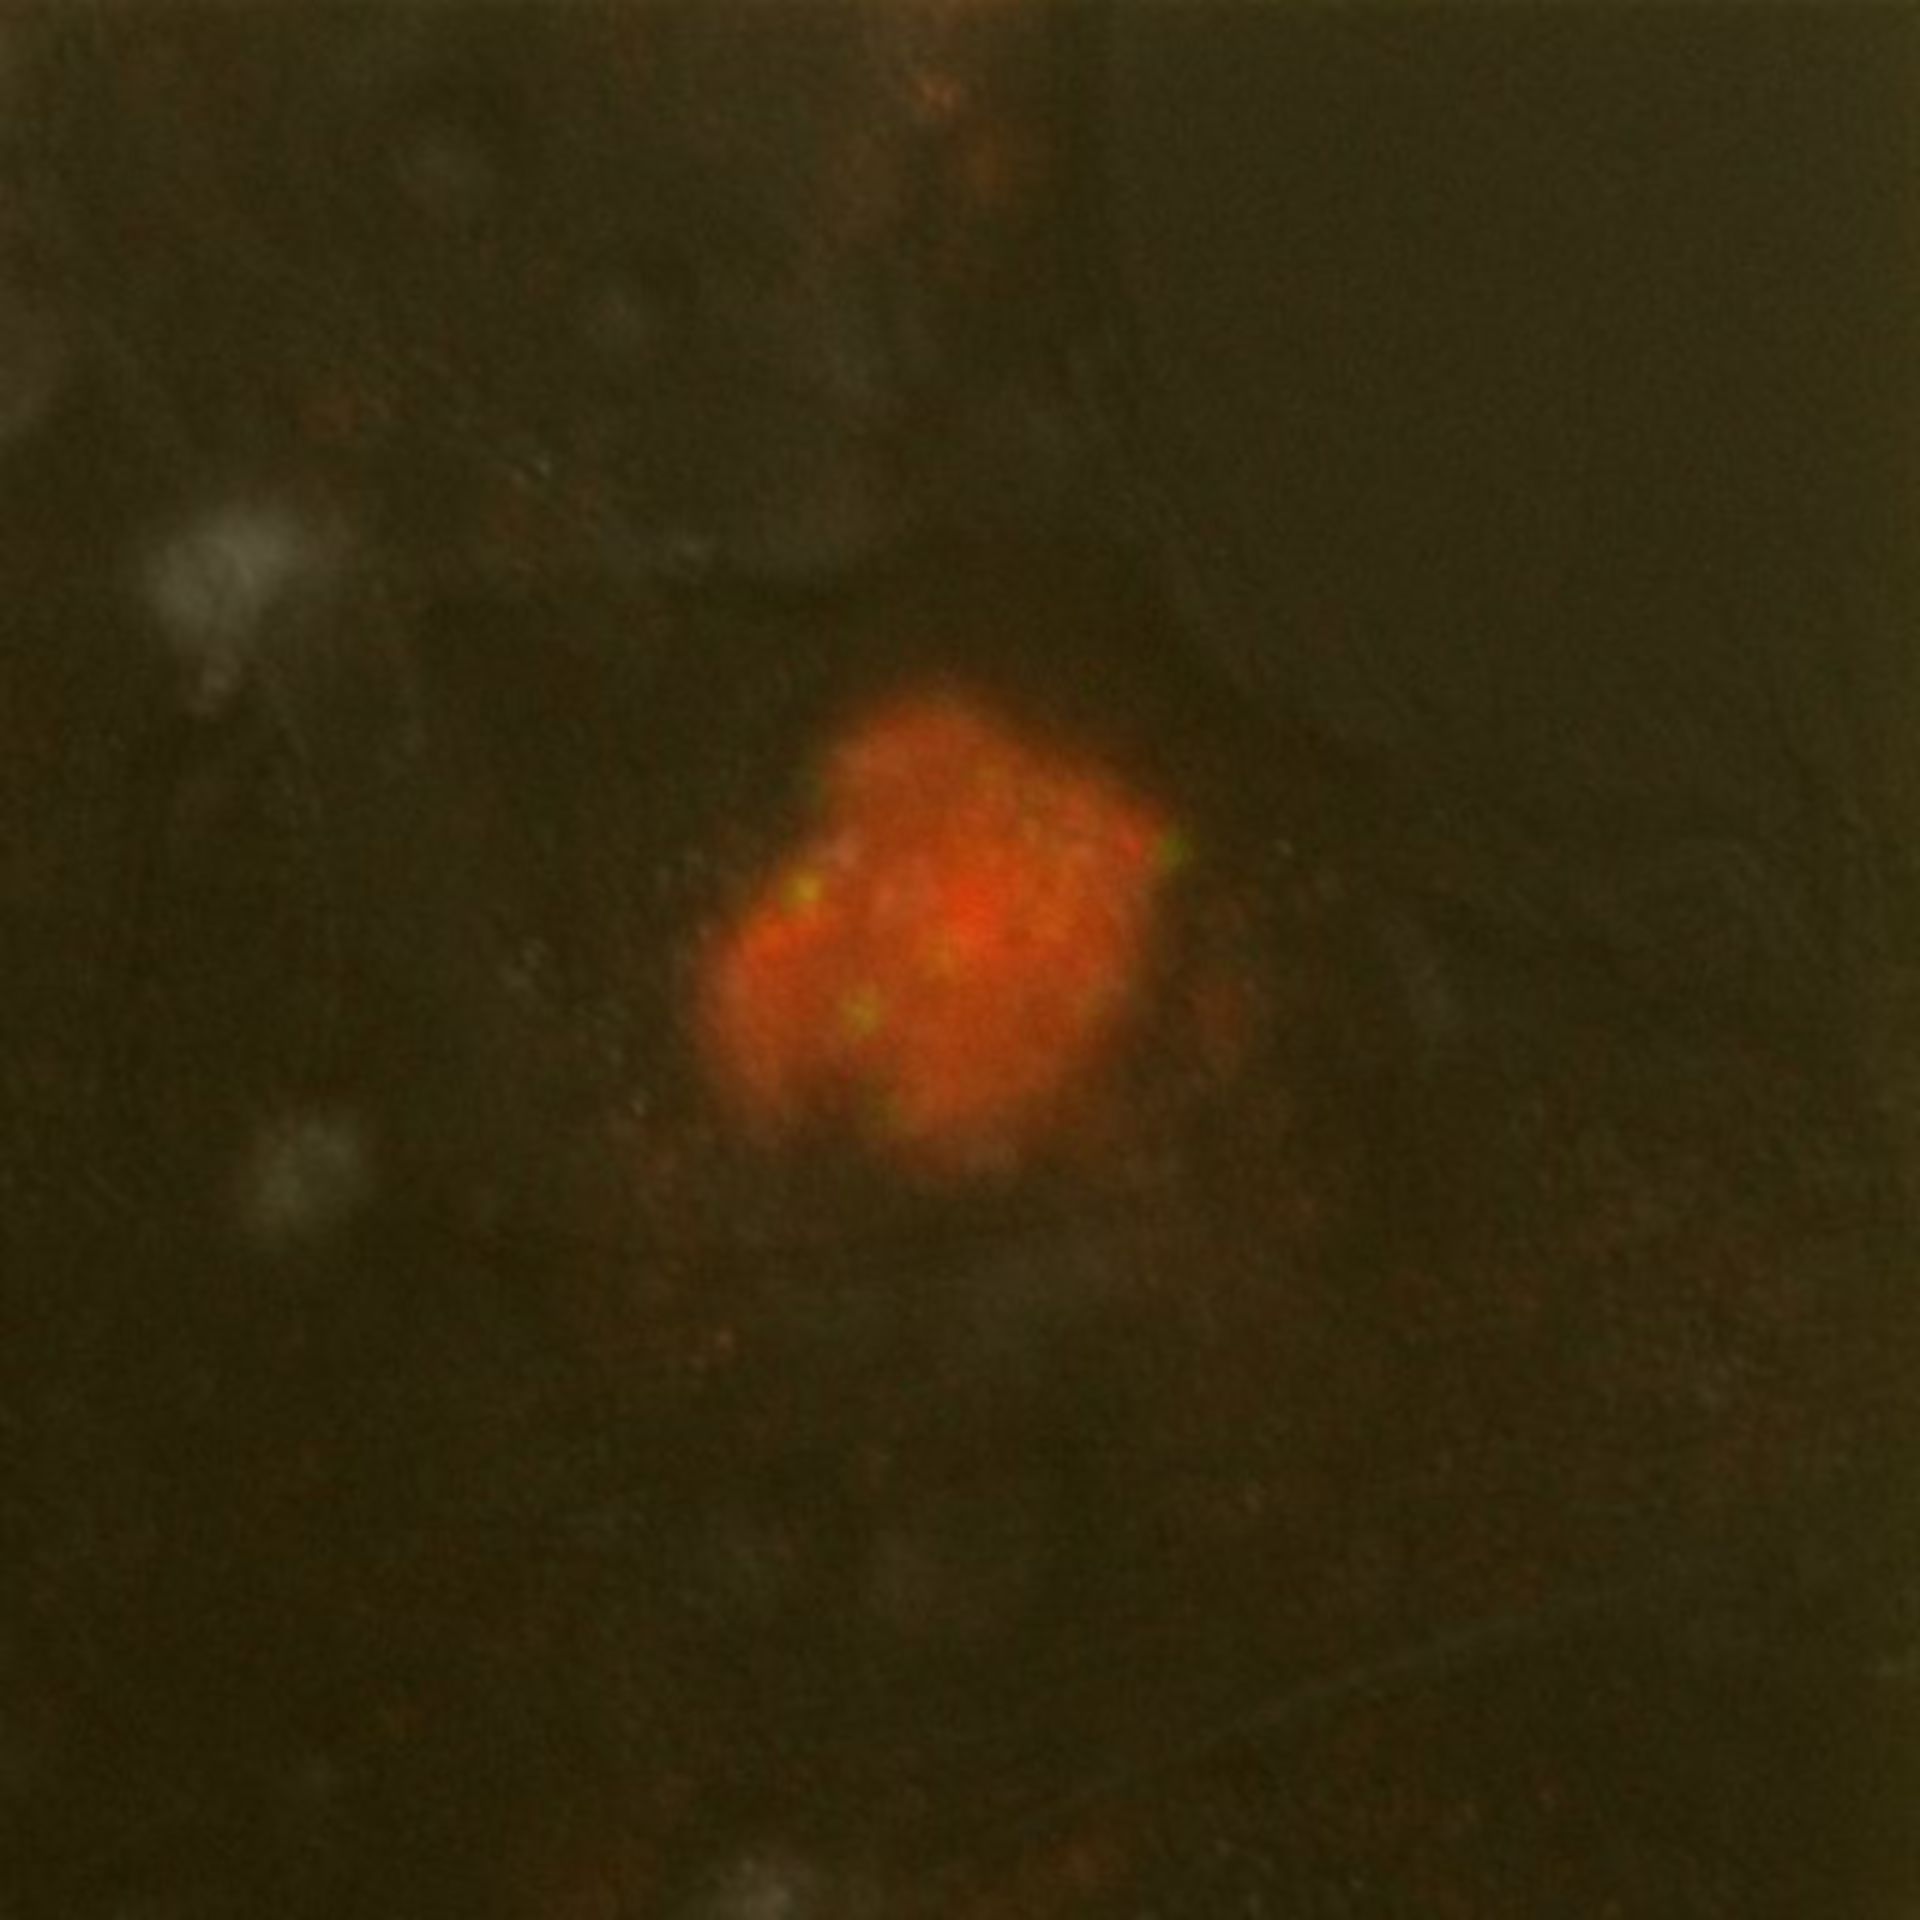 Toxoplasma gondii RH (Polar ring of apical complex) - CIL:10493